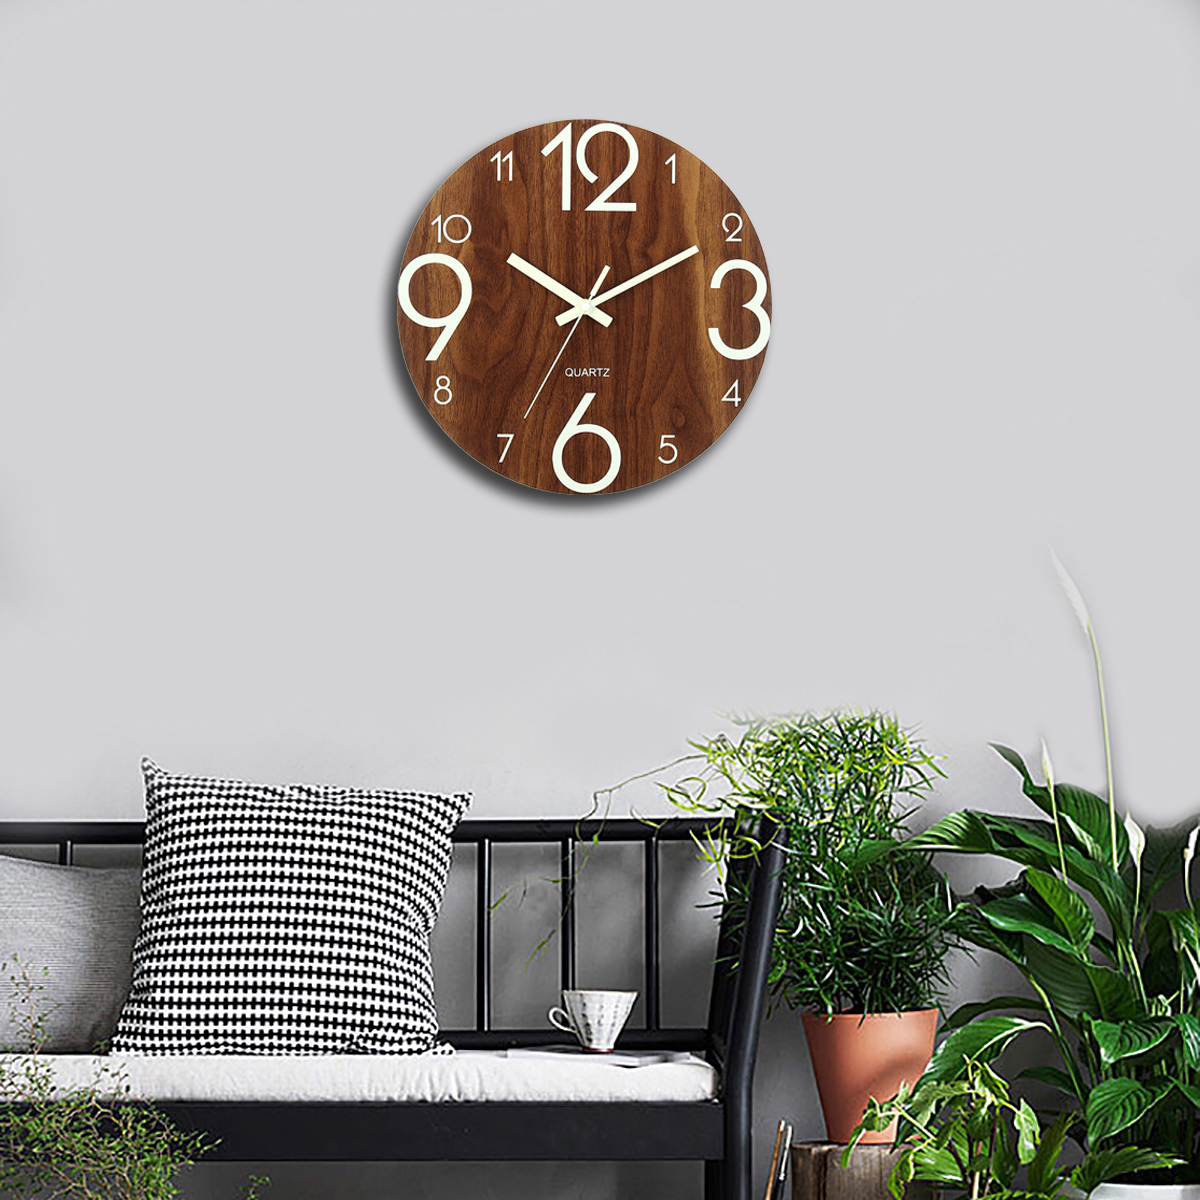 12quot-Luminous-Wall-Clock-Quartz-Wooden-Silent-Non-Ticking-Dark-Home-Room-Decor-1496359-4